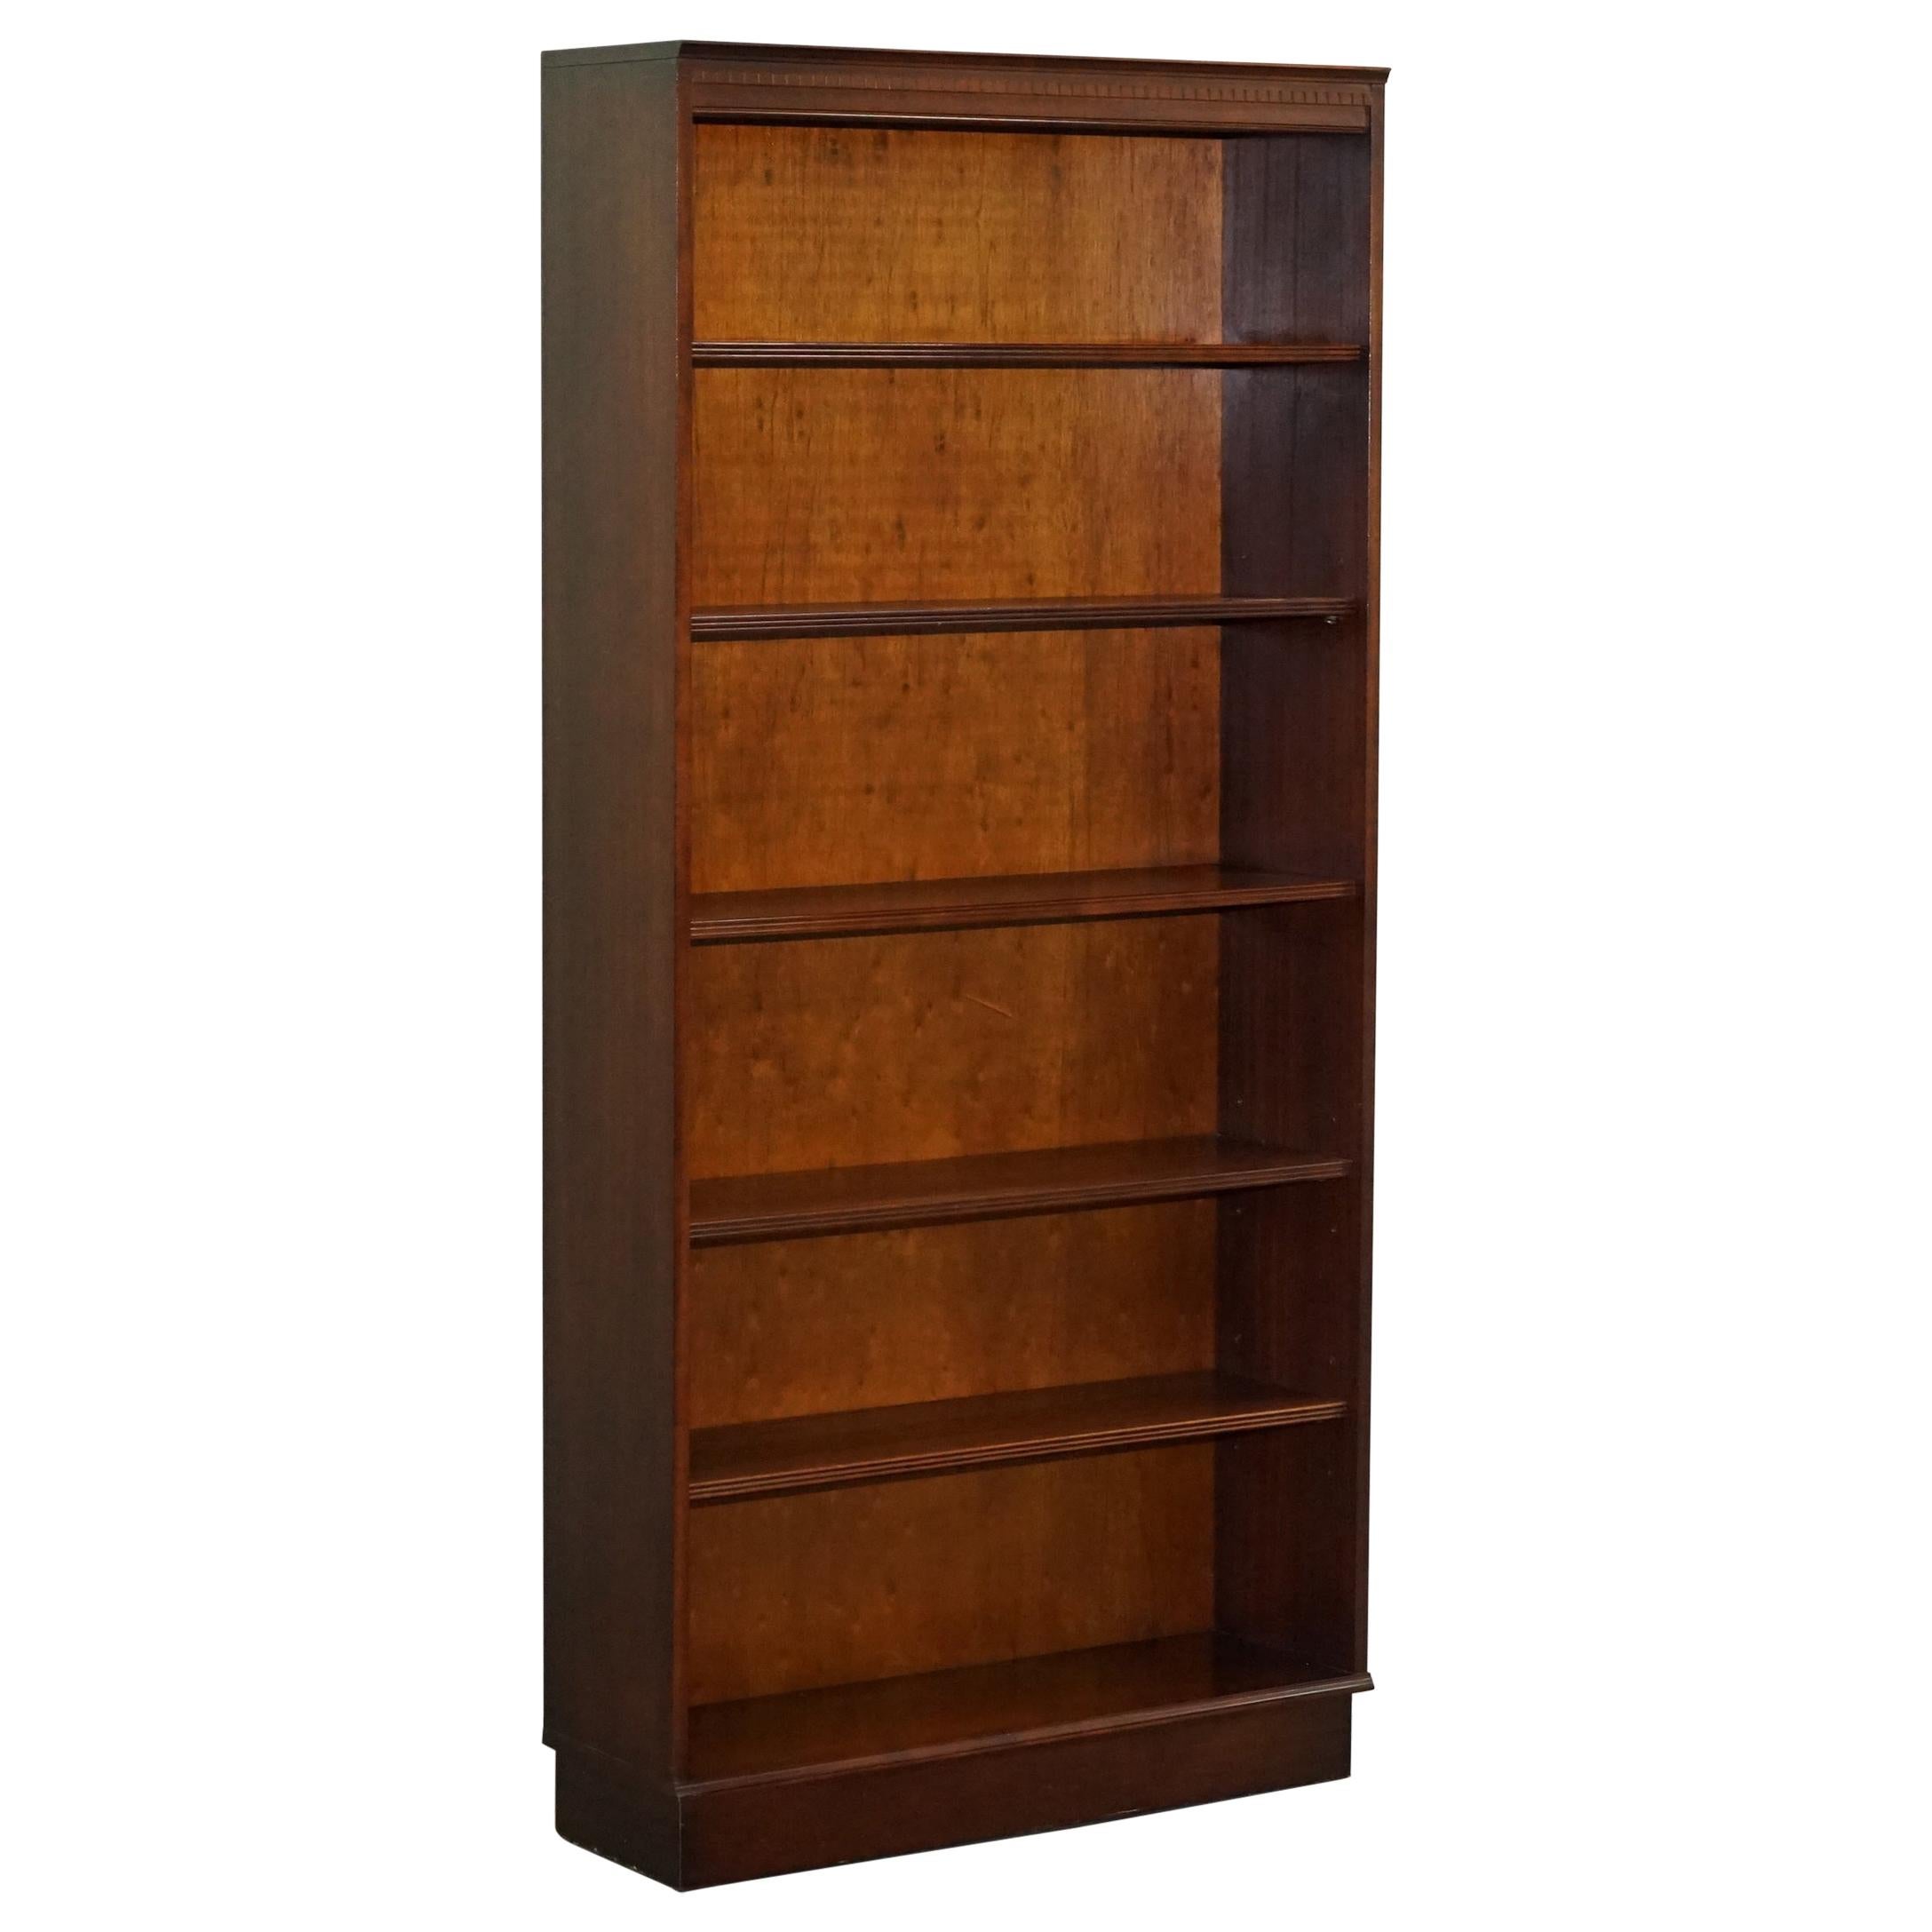 Bradley Furniture Mahogany English Library Bookcase Height Adjustable Shelves